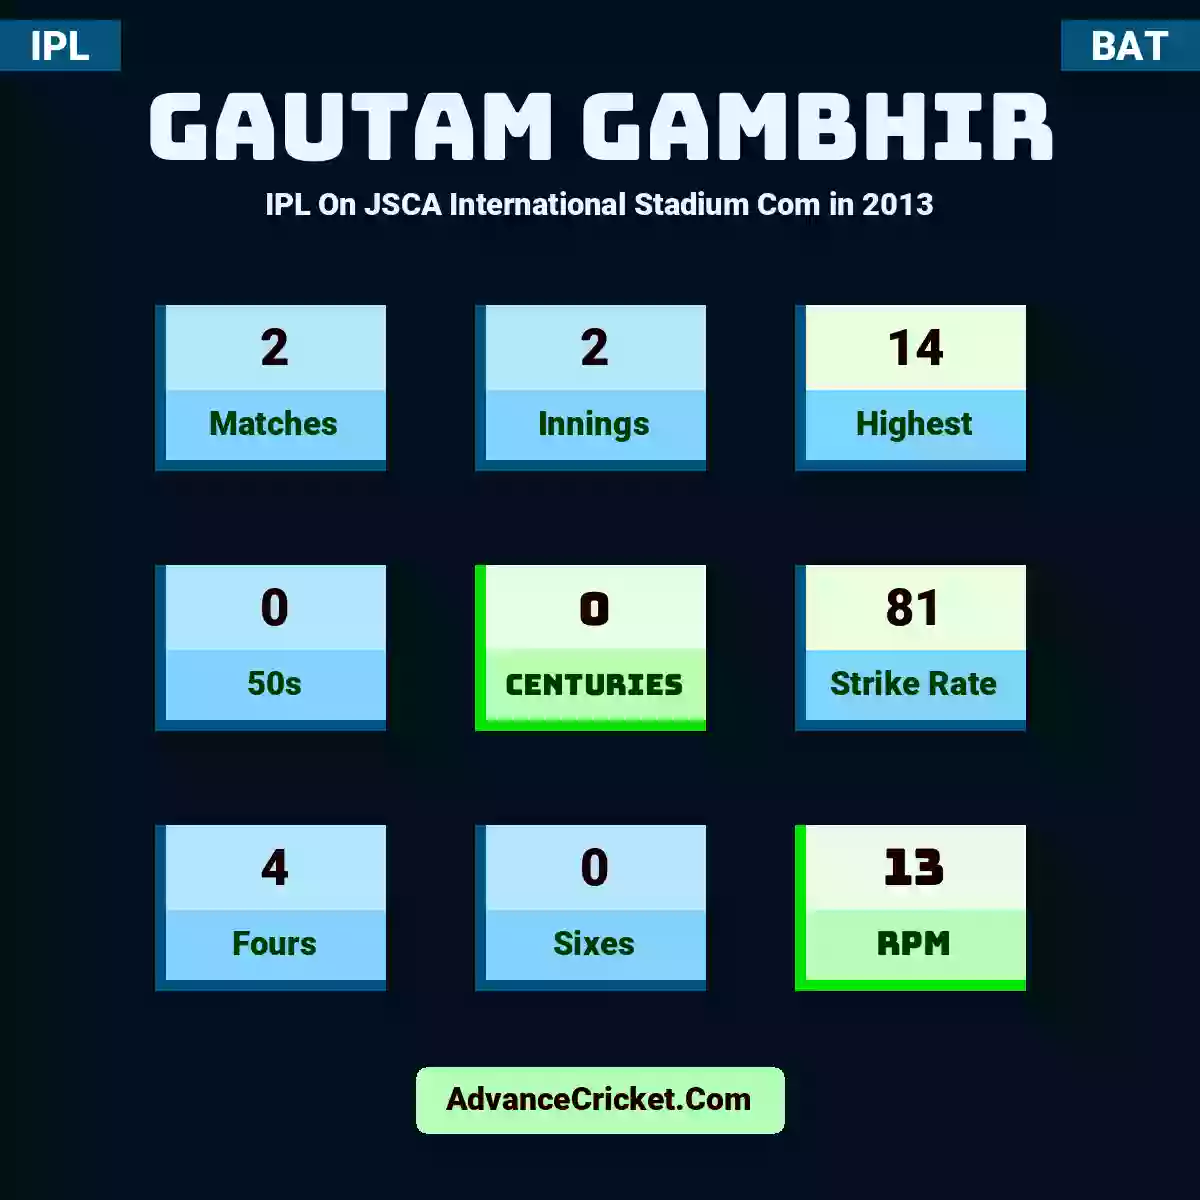 Gautam Gambhir IPL  On JSCA International Stadium Com in 2013, Gautam Gambhir played 2 matches, scored 14 runs as highest, 0 half-centuries, and 0 centuries, with a strike rate of 81. G.Gambhir hit 4 fours and 0 sixes, with an RPM of 13.